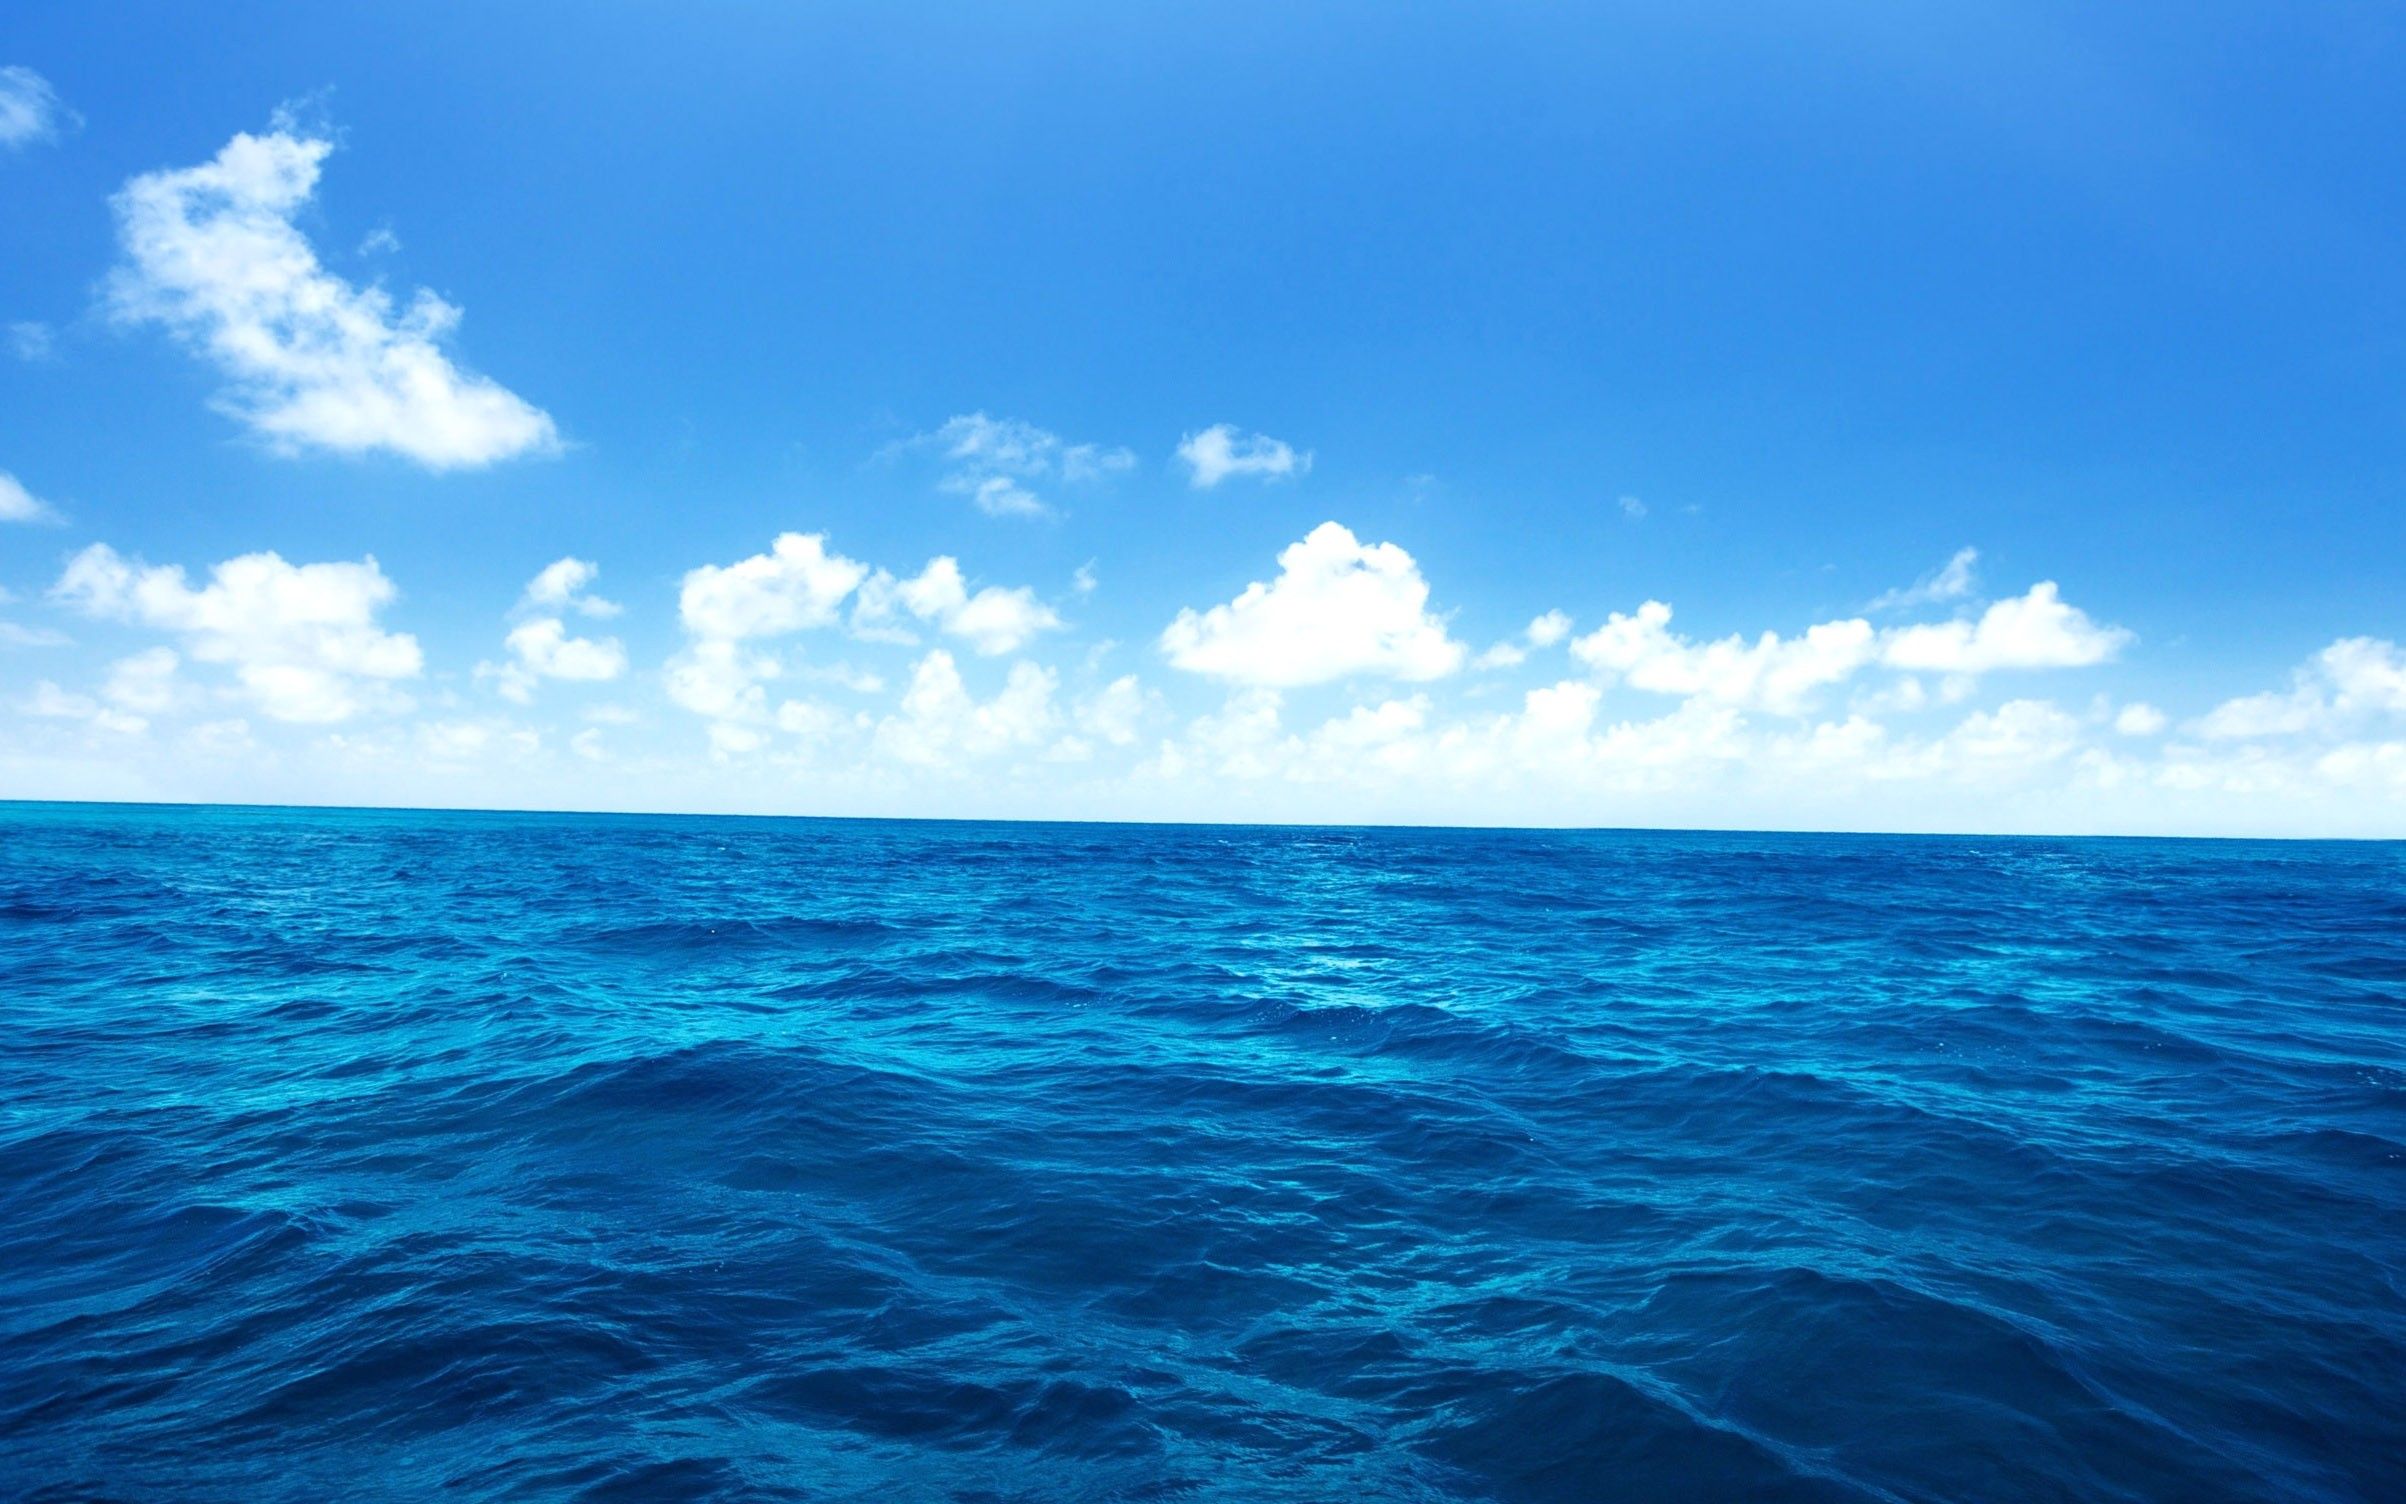 Water, Sea, HD Sea Wallpaper, Ocean, Summer, Sky, Fresh Air, Holiday, Widescreen, Free, 2406x1504